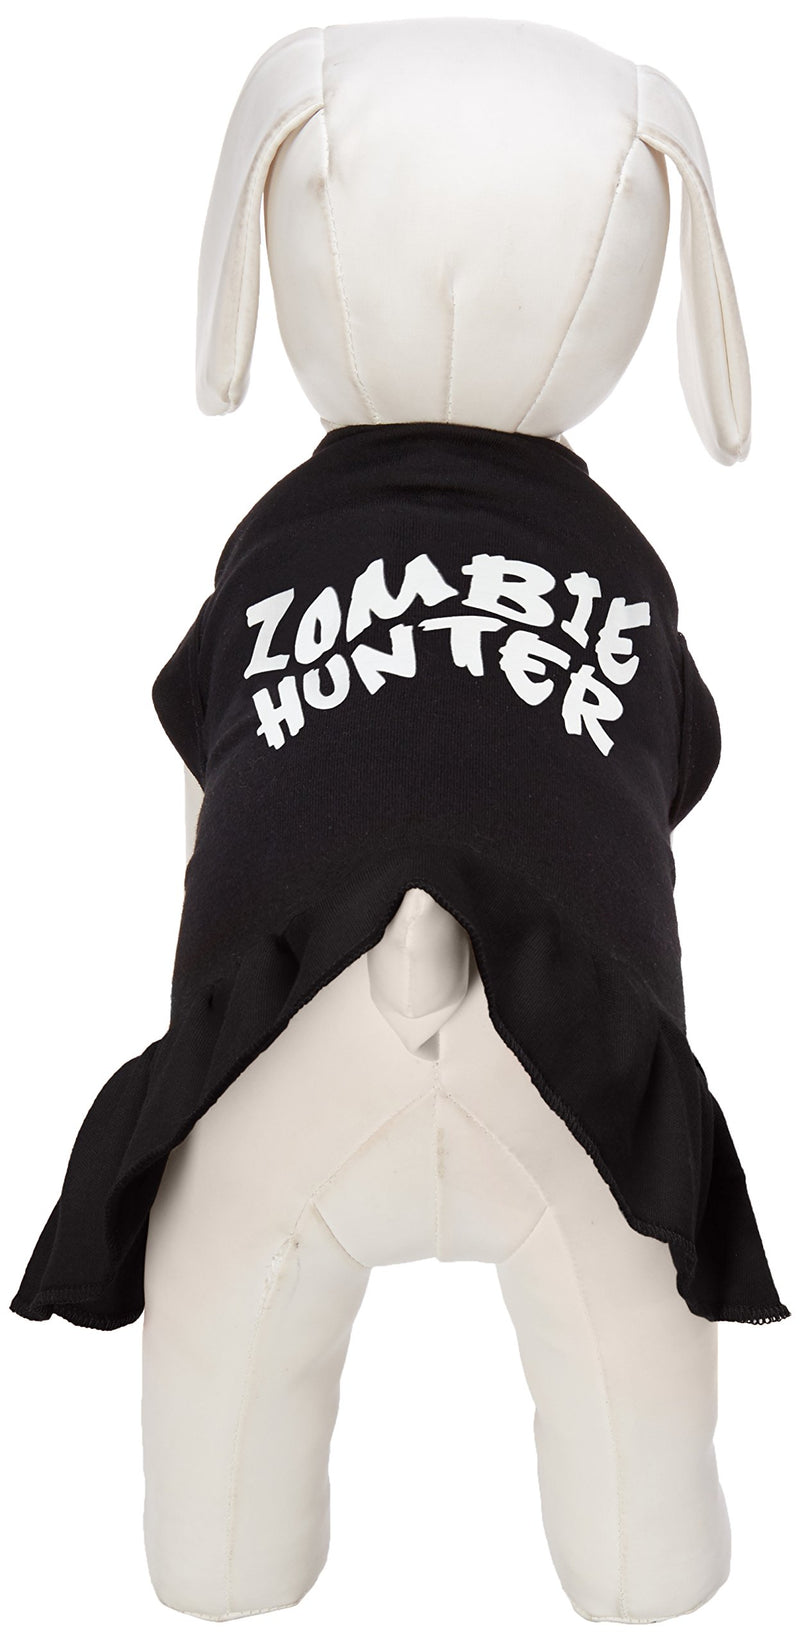 [Australia] - Mirage Pet Products 57-54 SMBK Black Zombie Hunter Screen Print Dress, Small 